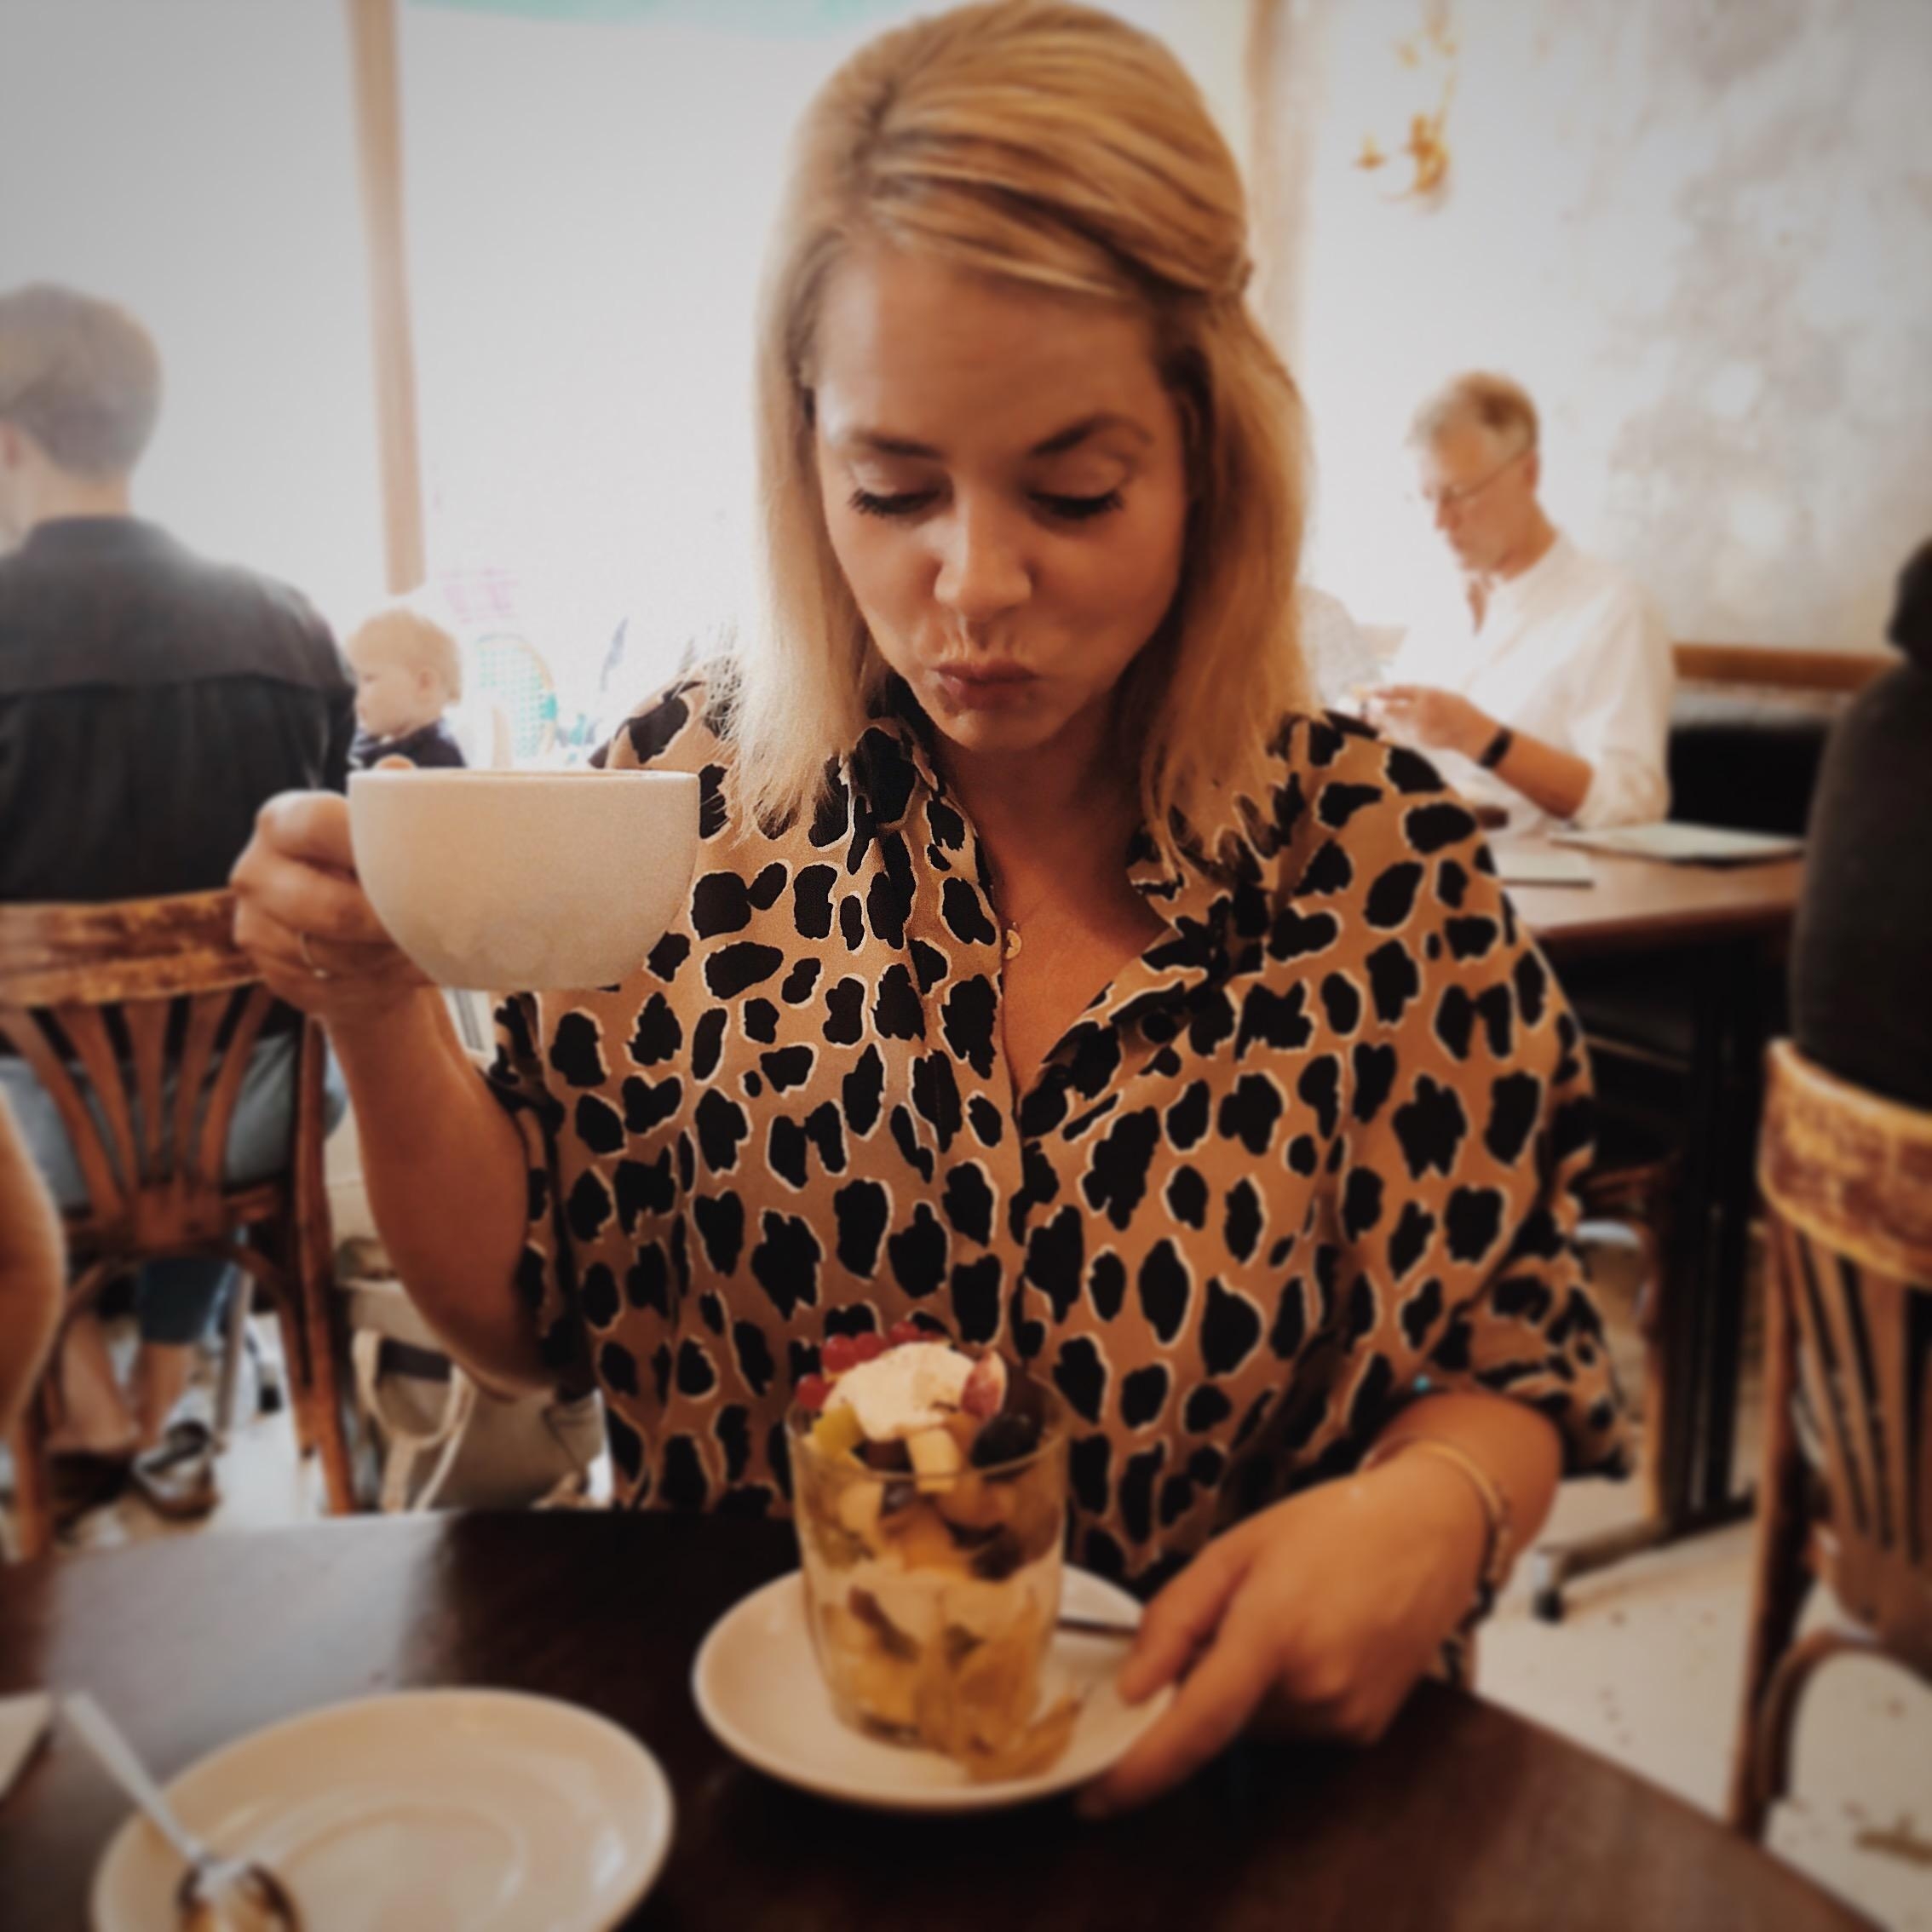 is it love? #breakfast #frühstück #coffeelover #kaffee #blonde #ootd #healthyfood #müsli #auszeit